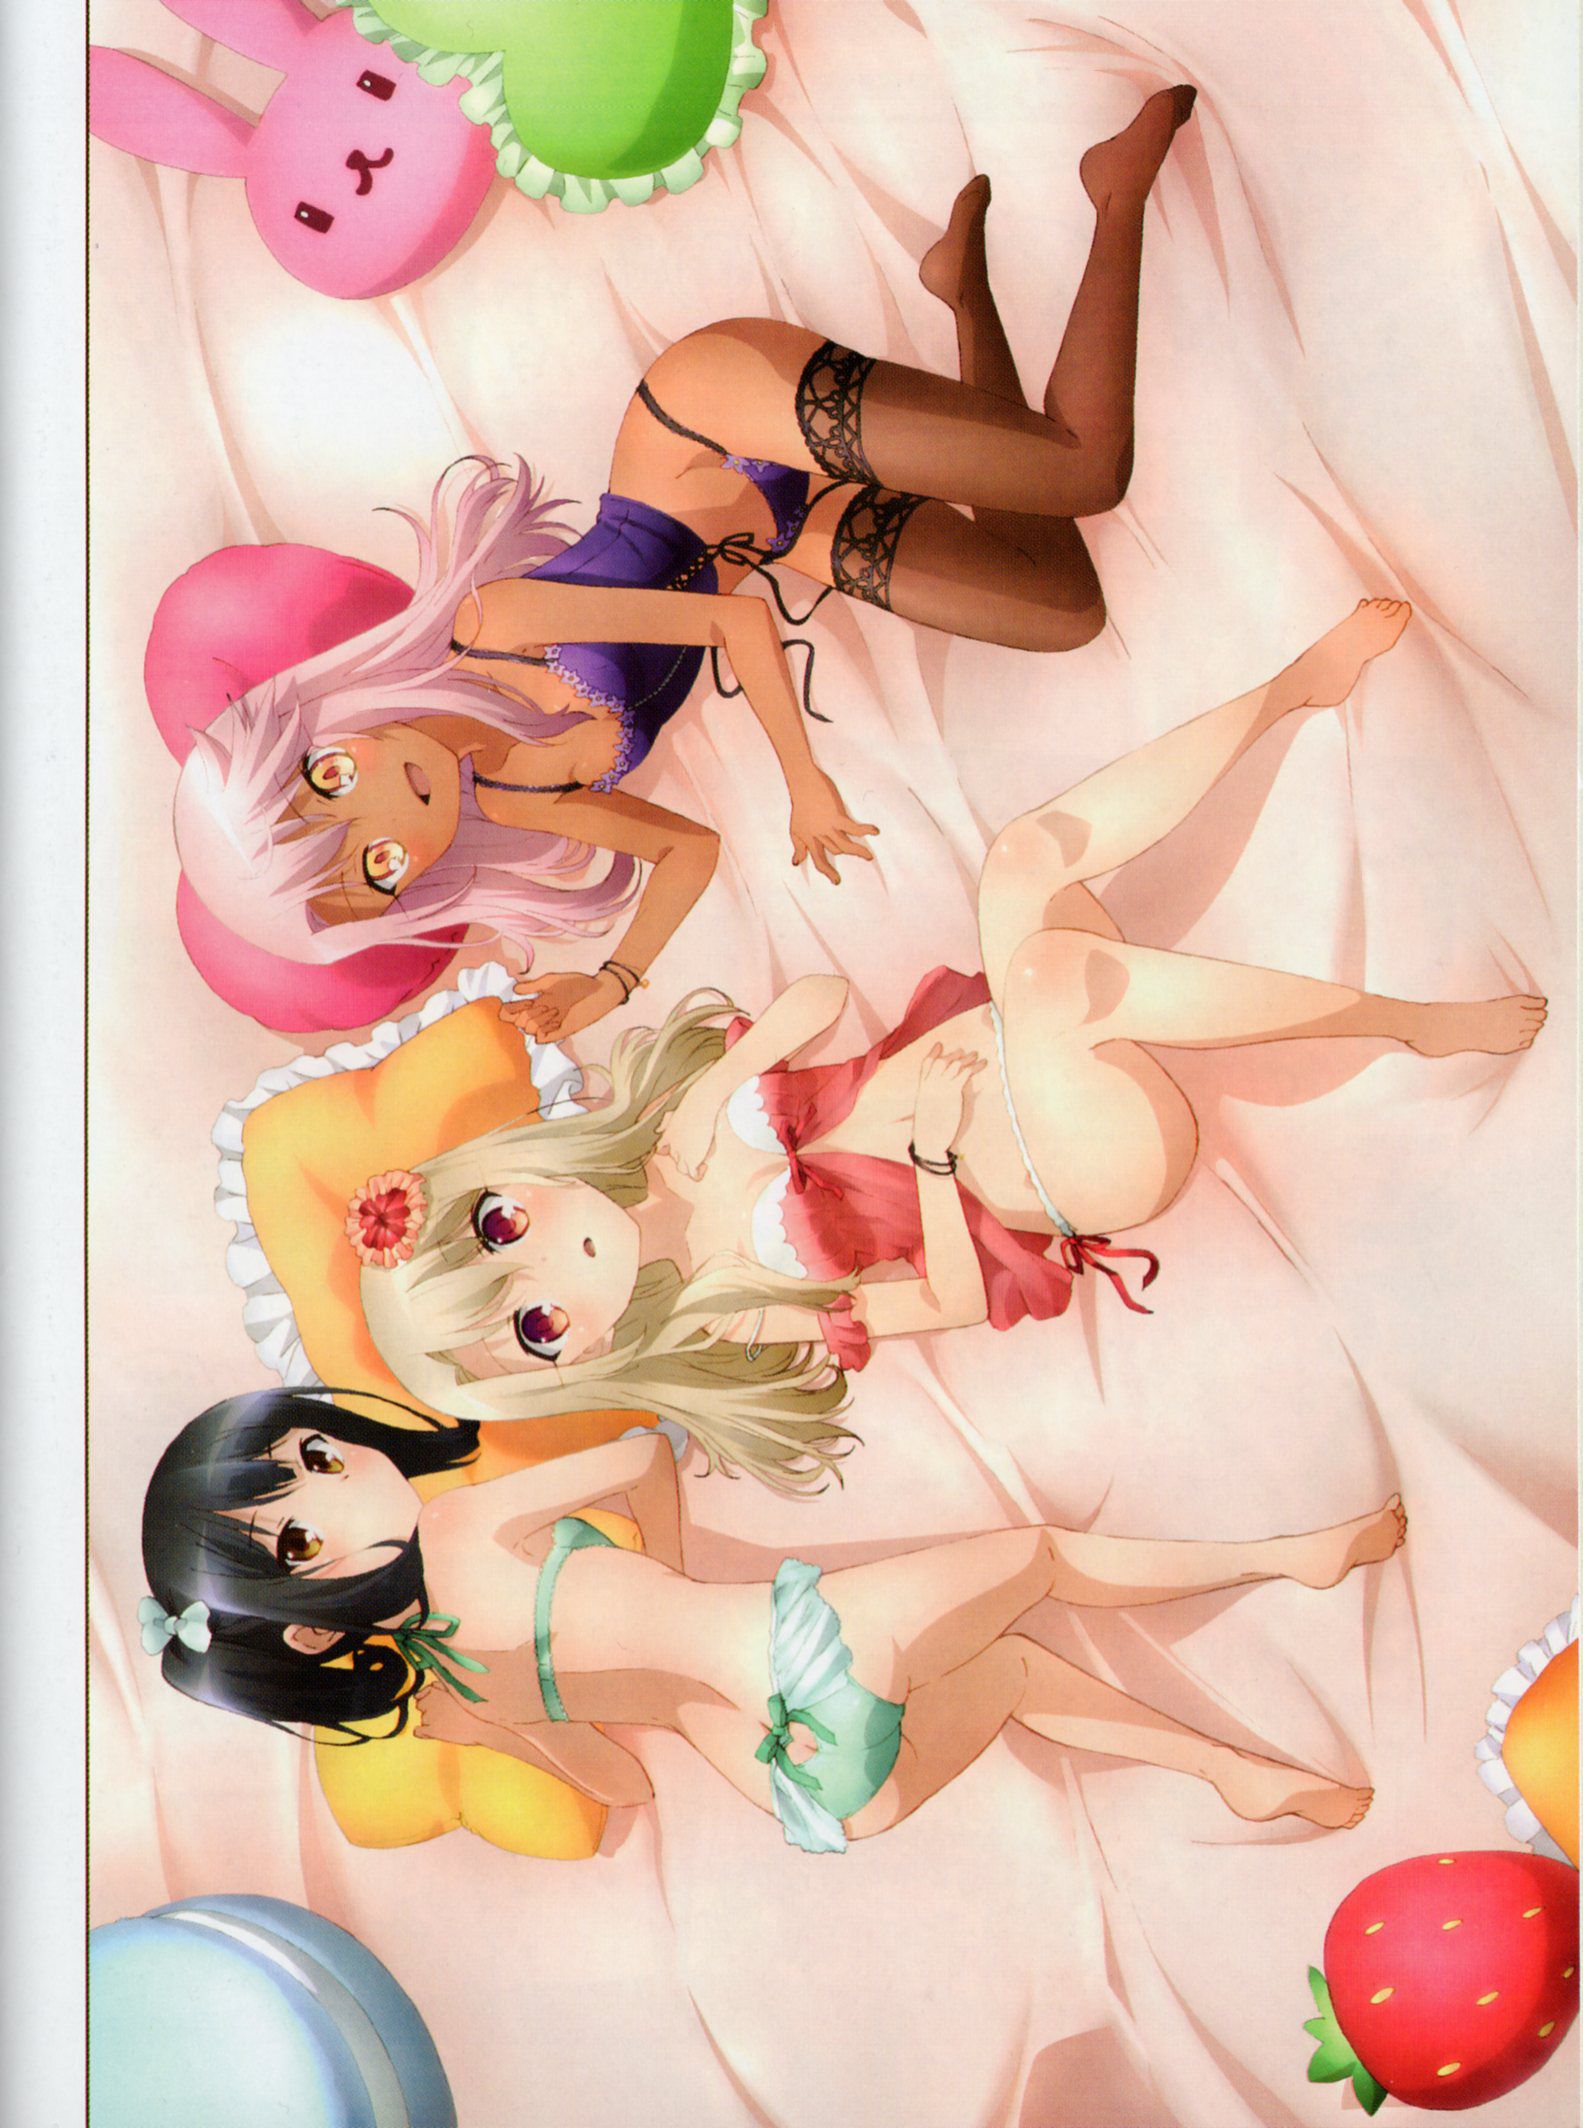 Fate/kaleid liner Prisma ☆ Ilya dry! BD vol. 5 "award animation Nightgown of Erica! reveal a kinky night dolls of sleeping! 」 121